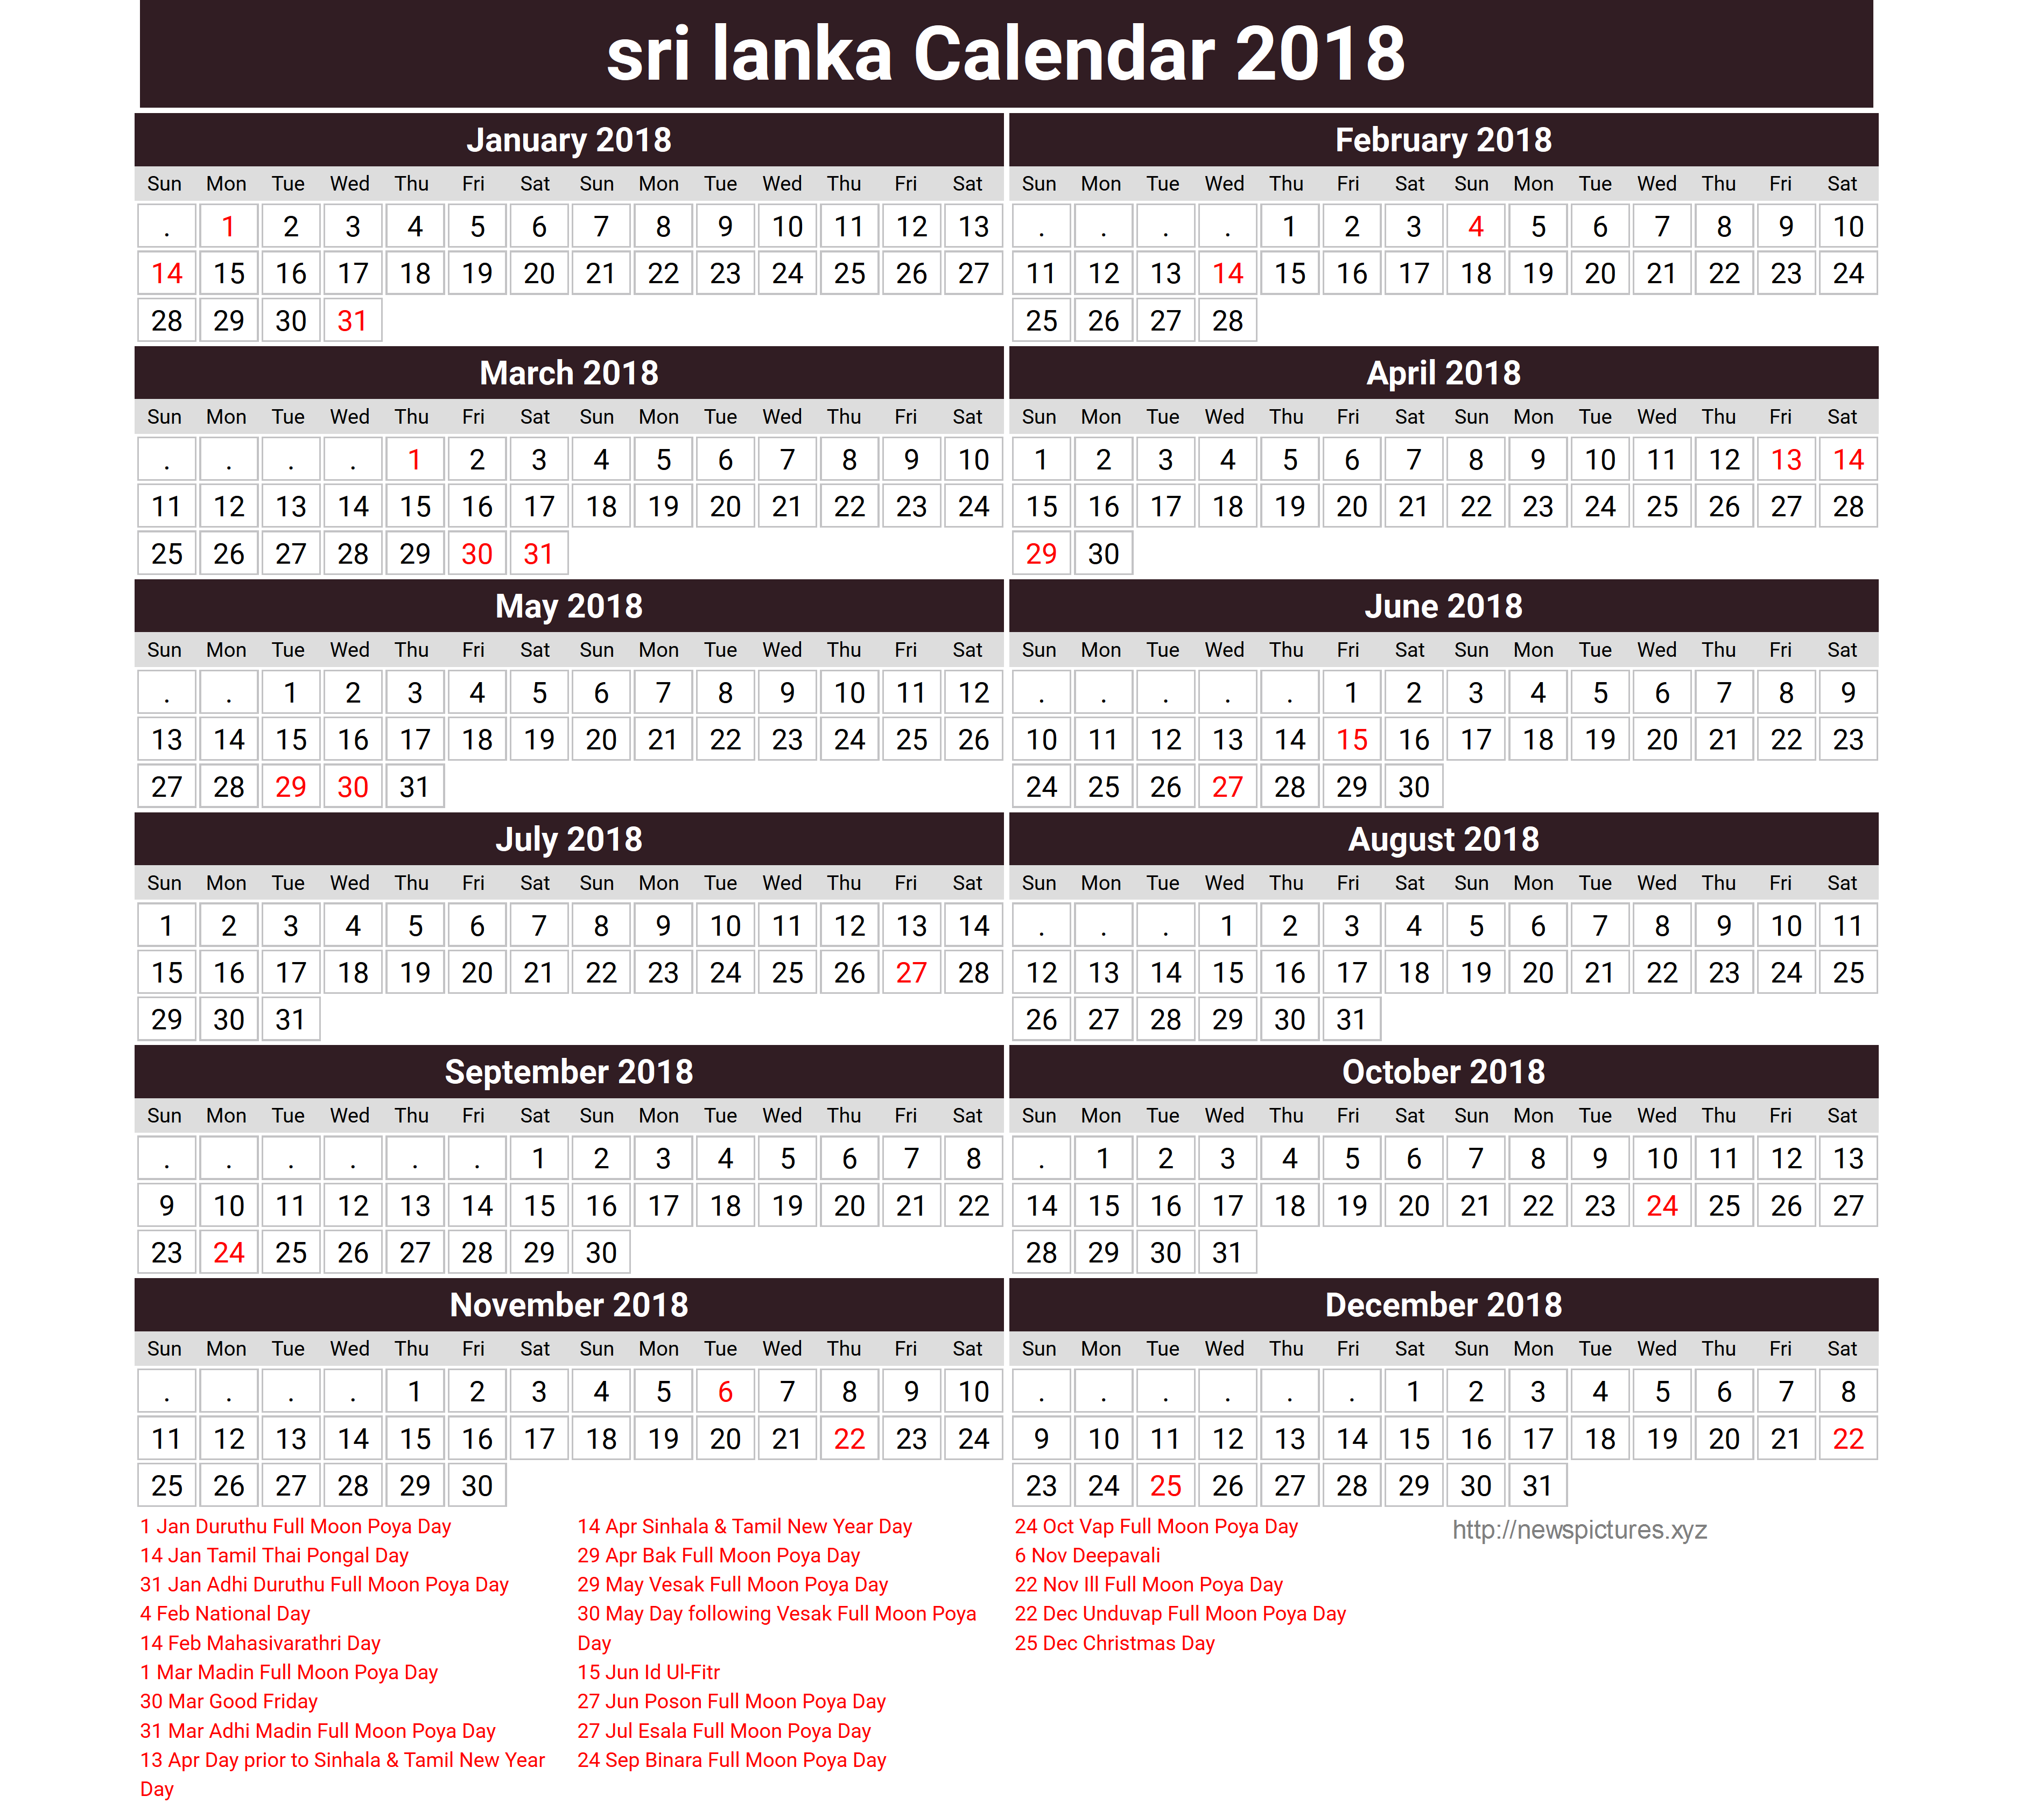 Download sri lanka calendar 2018 with holidays list